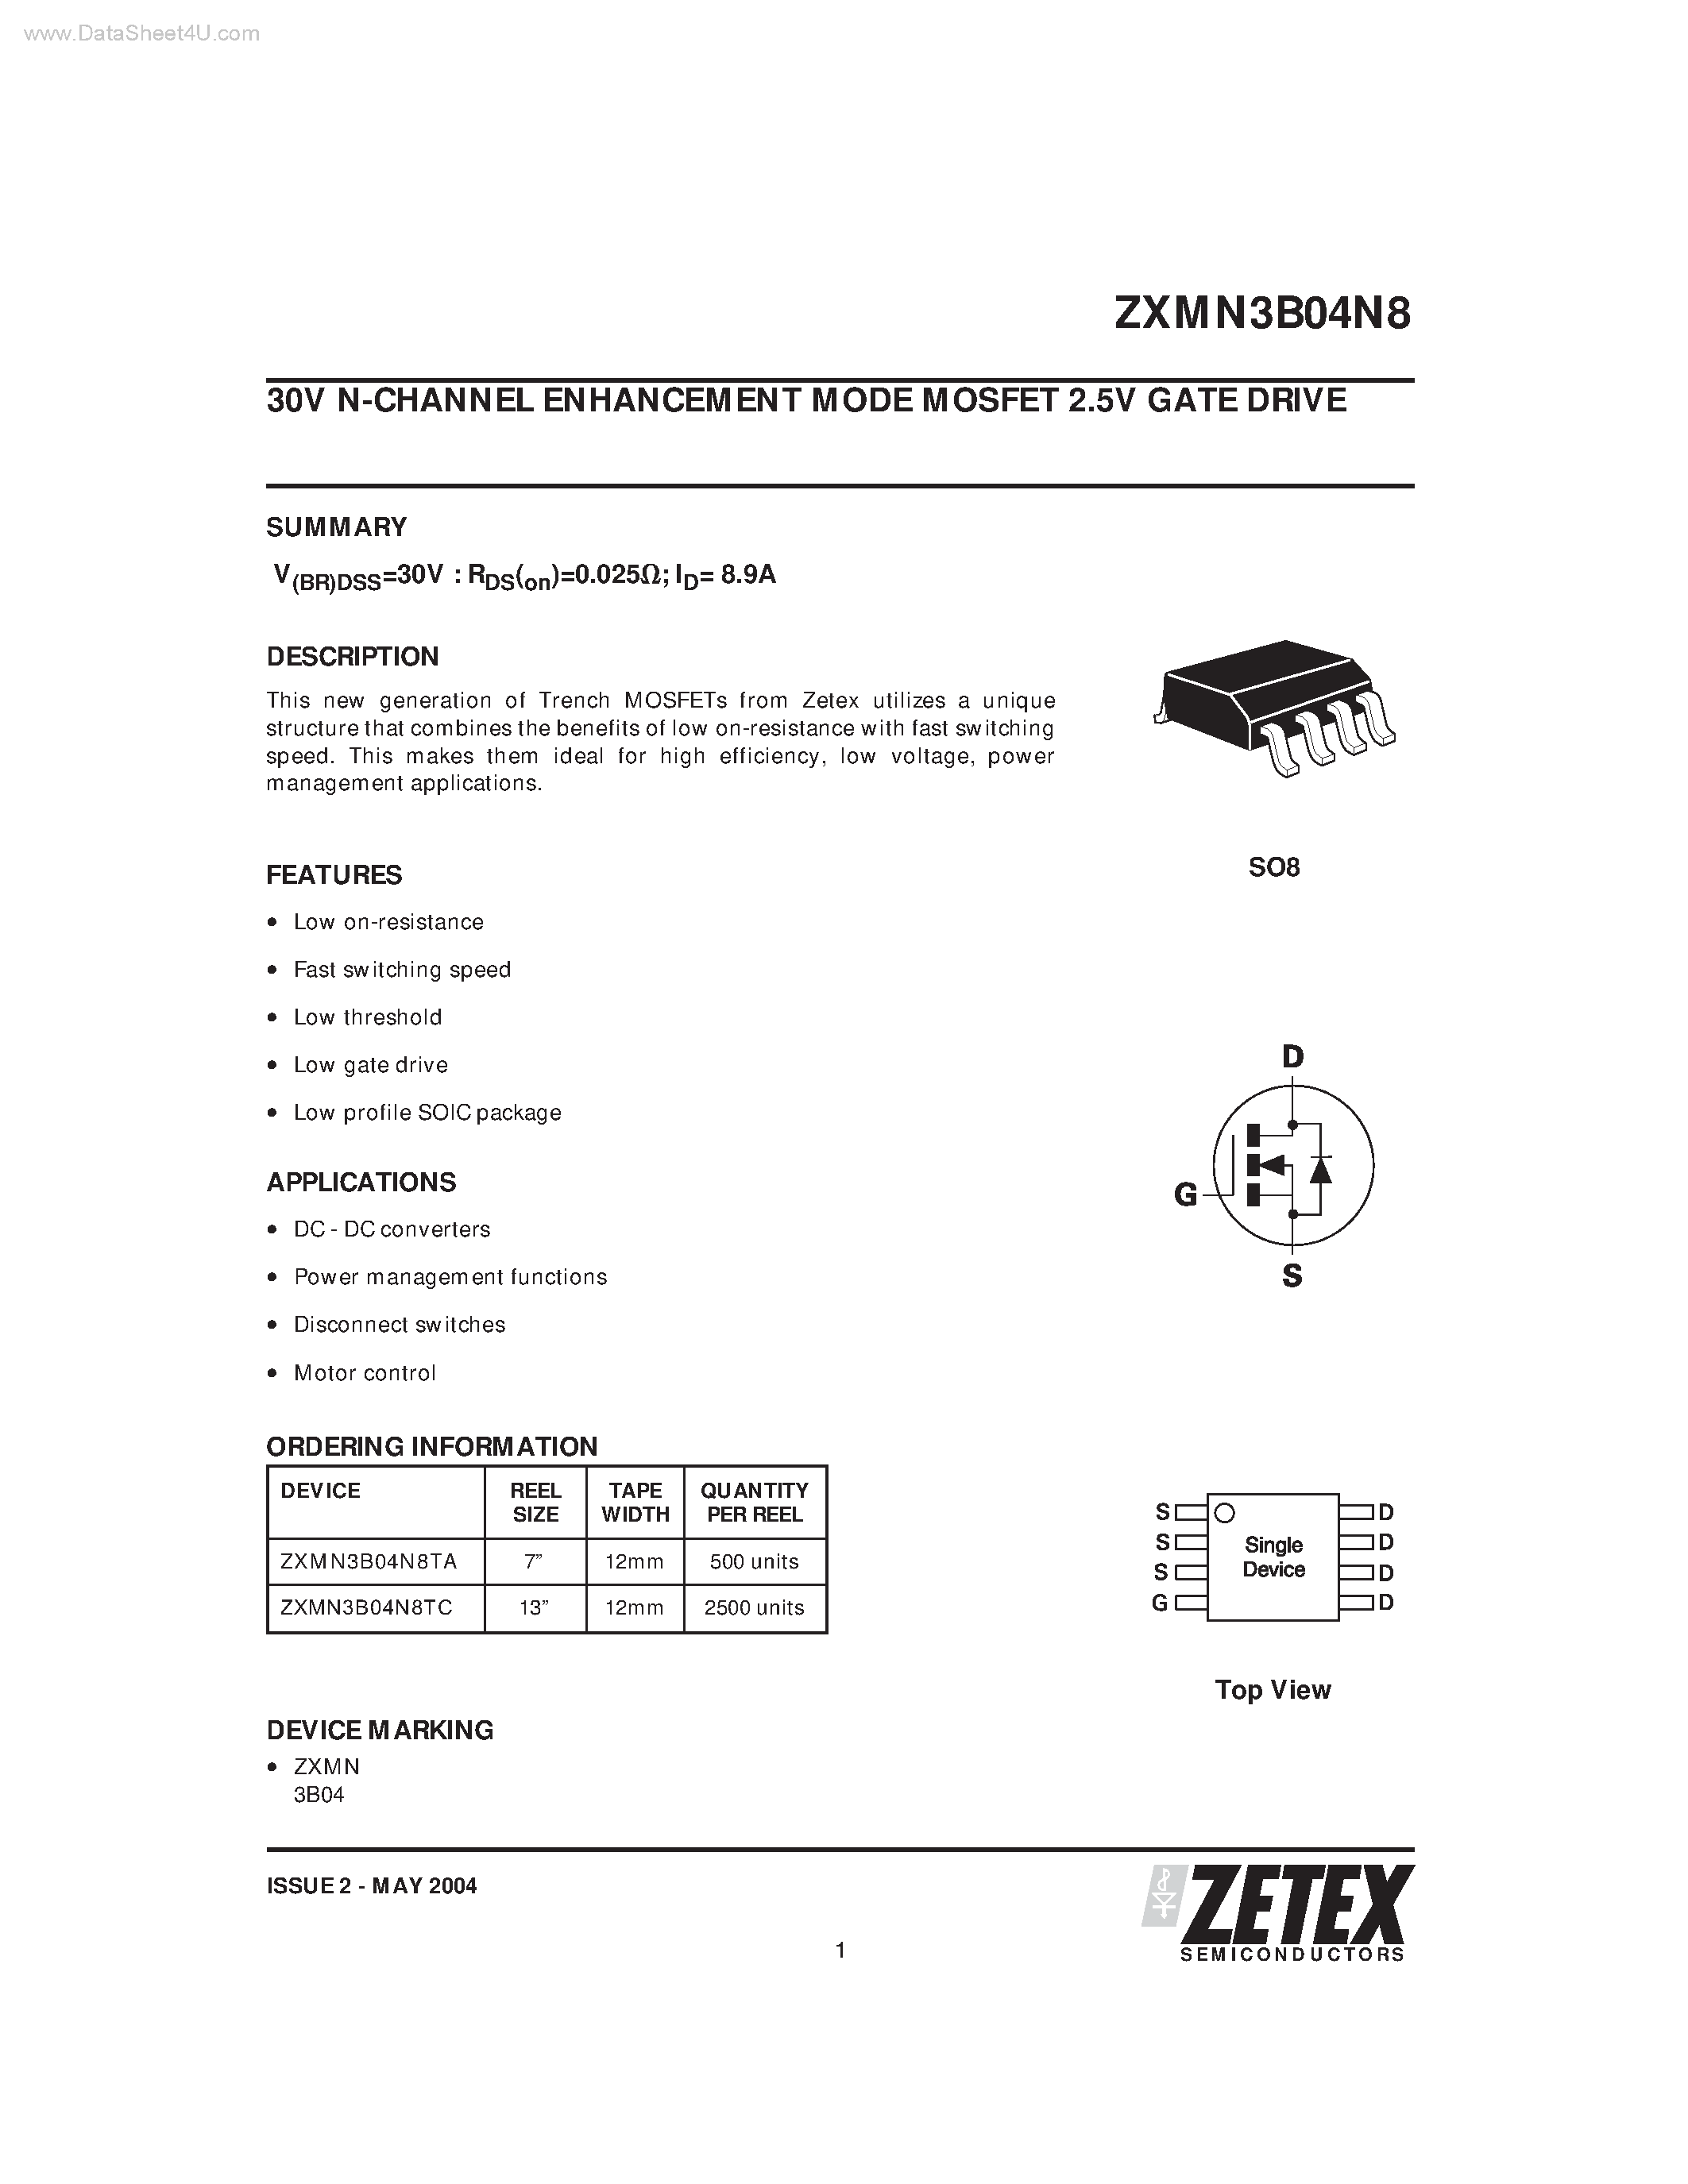 Datasheet ZXMN3B04N8 - N-CHANNEL ENHANCEMENT MODE MOSFET 2.5V GATE DRIVE page 1